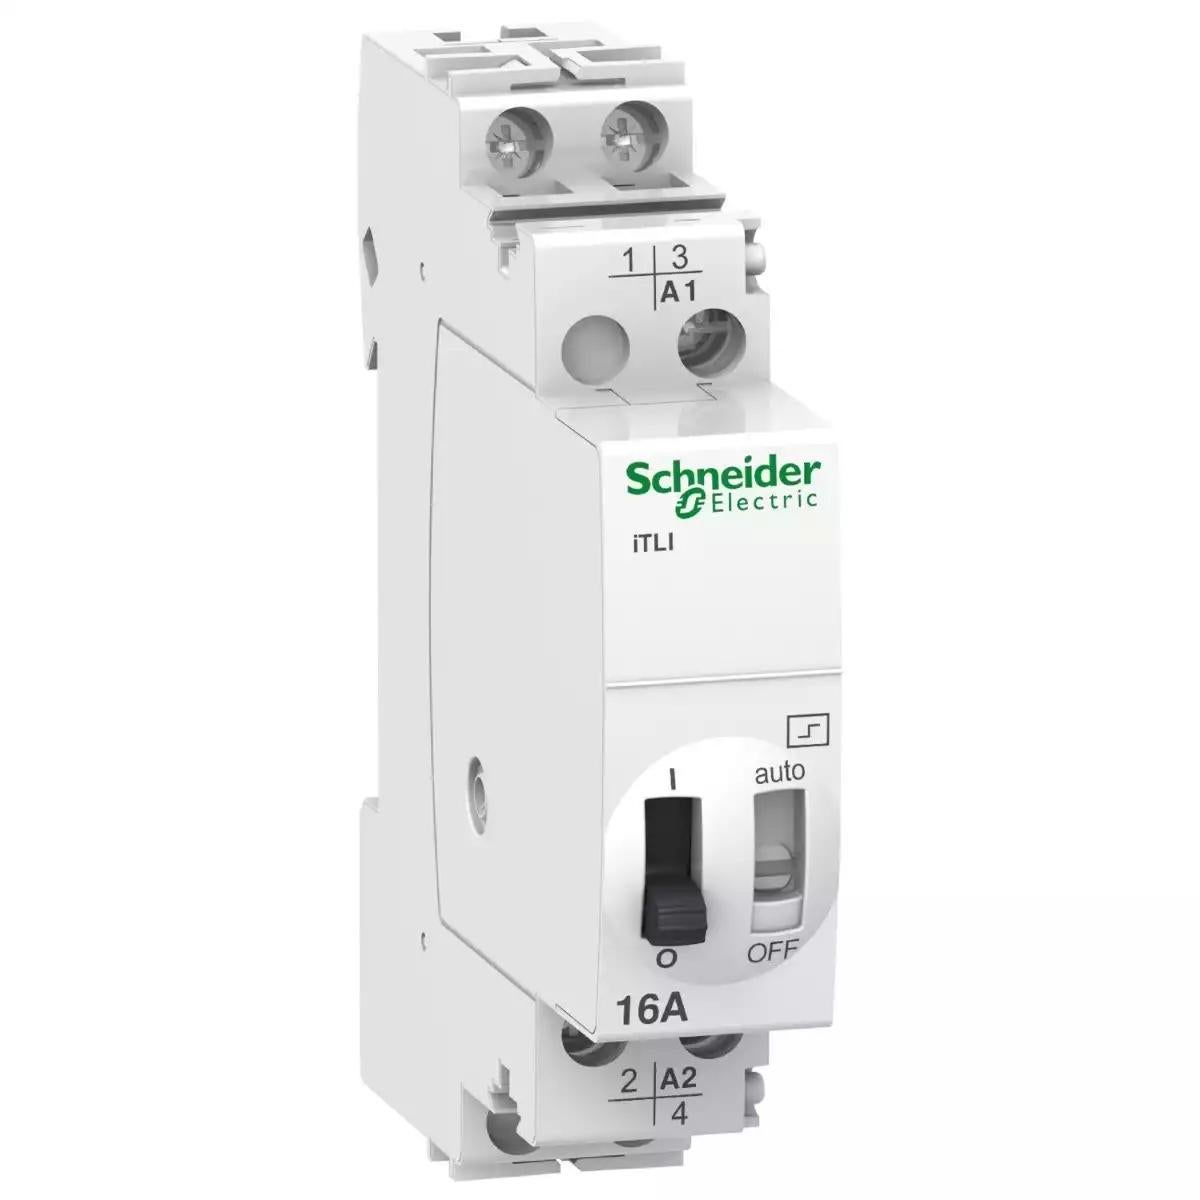 Schneider Electric Acti 9 iTL impulse relay - 2P - 1NO+1NC - 16A - coil 110 VDC - 230...240 VAC 50/60Hz